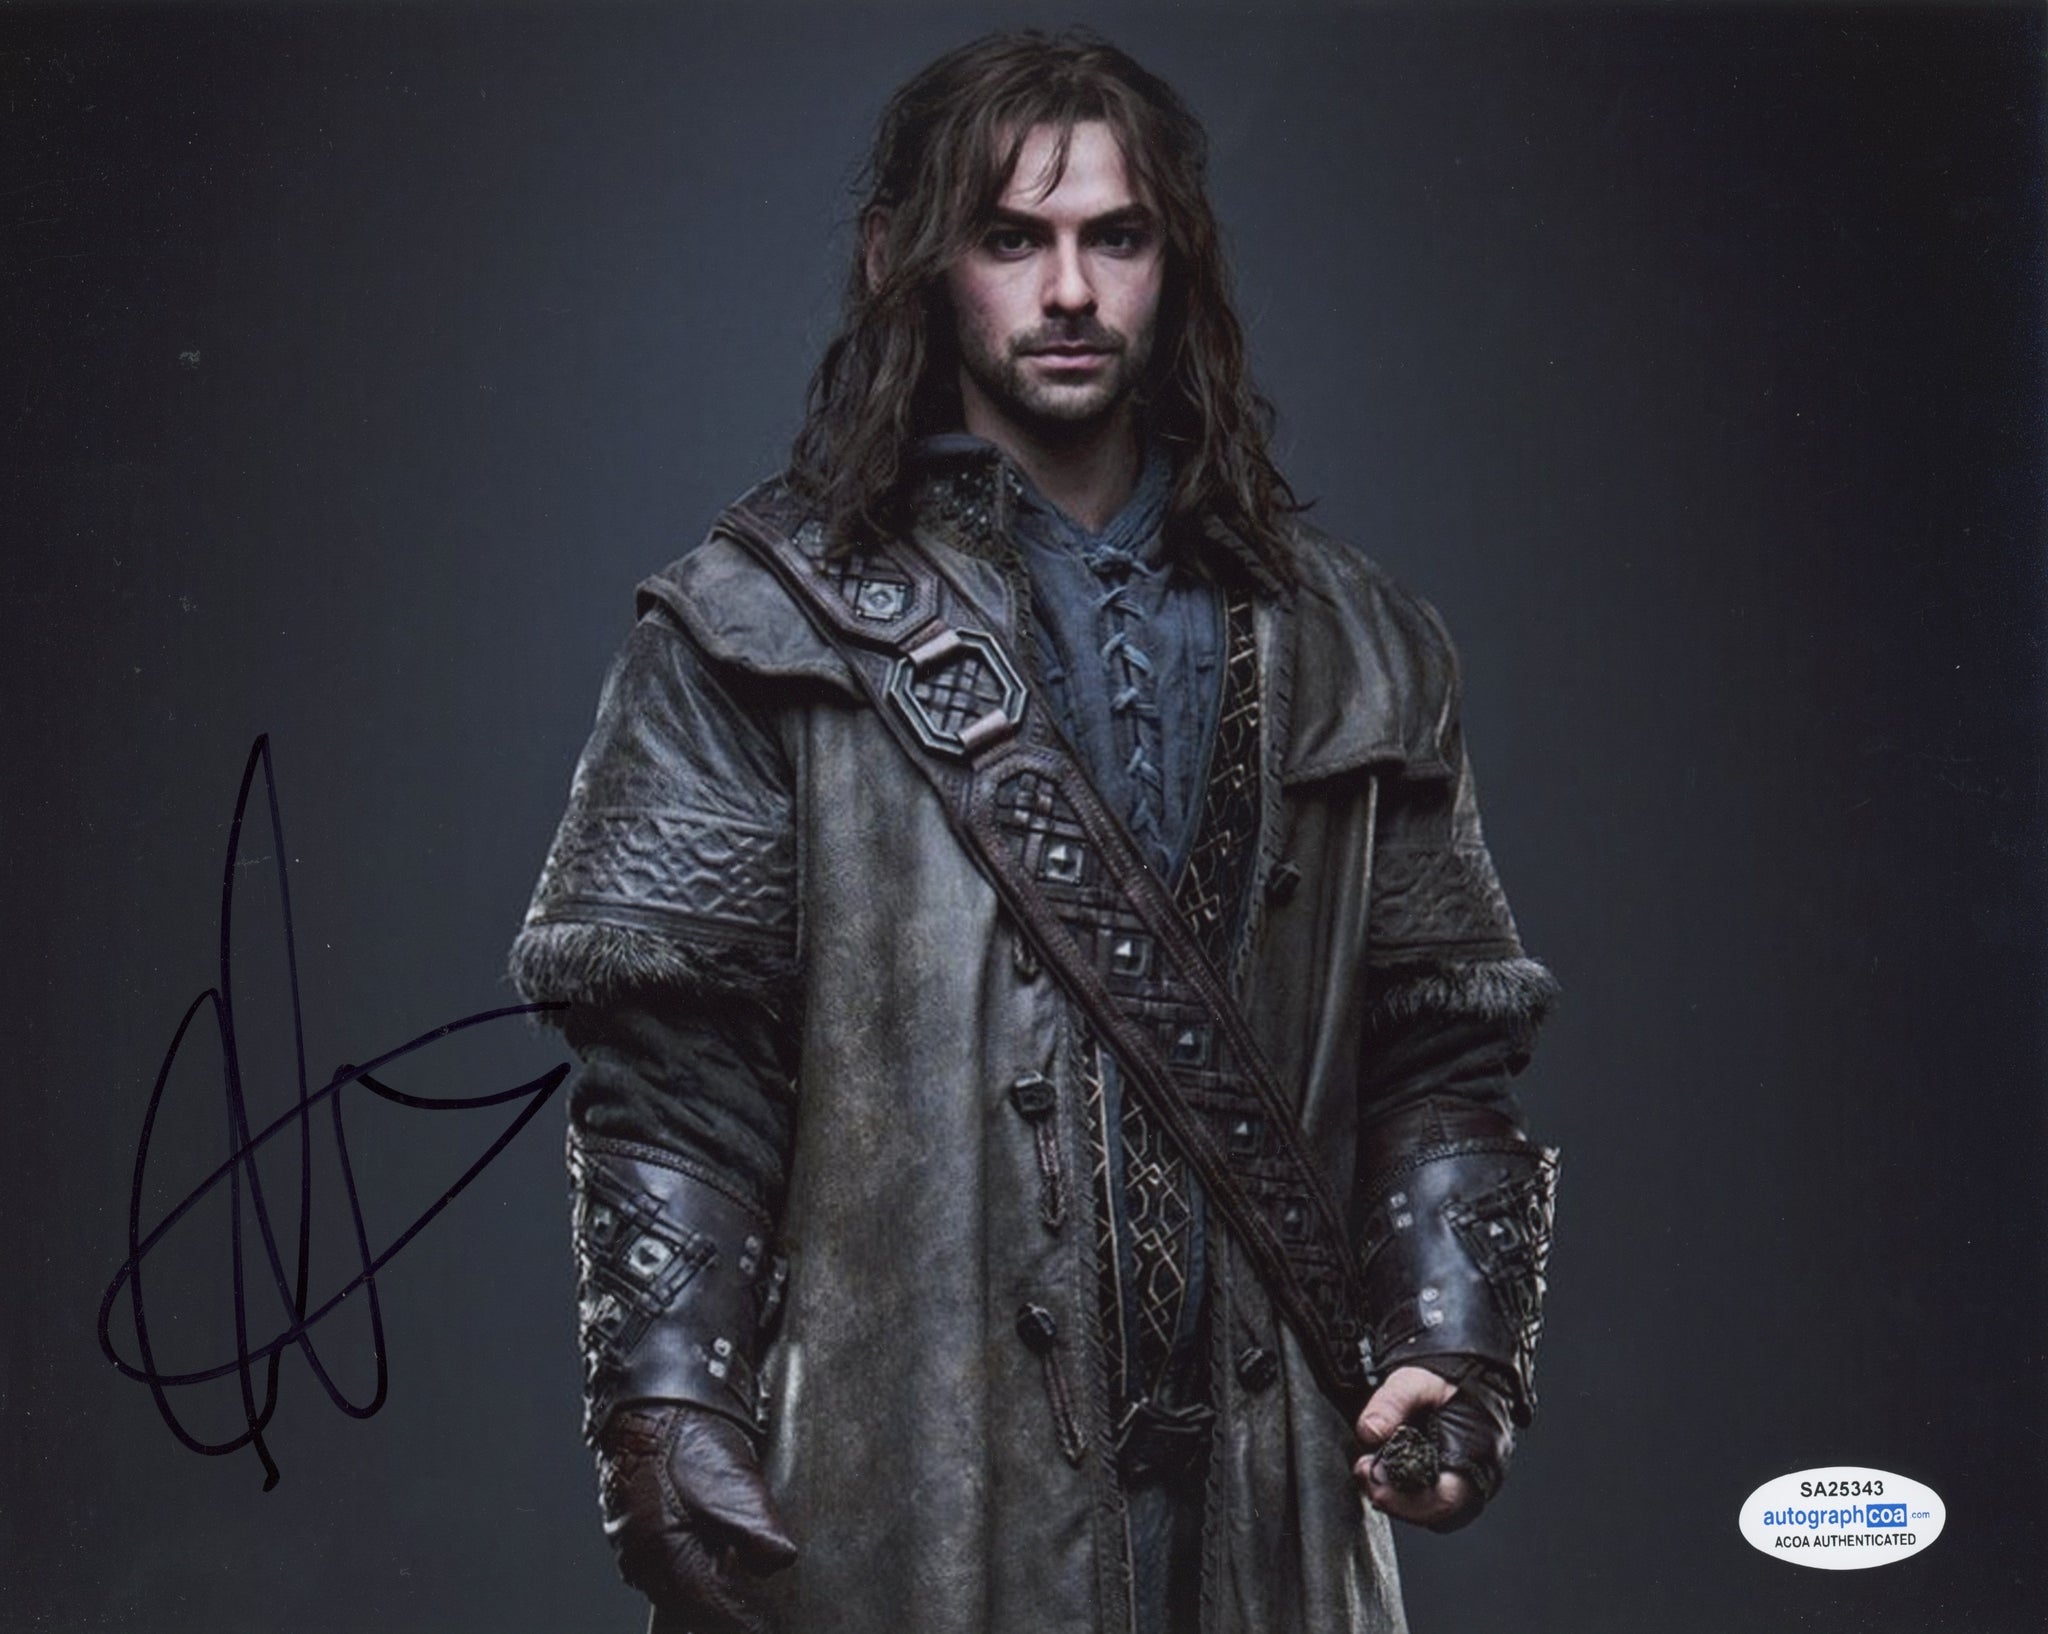 Aidan Turner The Hobbit Signed Autograph 8x10 Photo ACOA #9 - Outlaw Hobbies Authentic Autographs